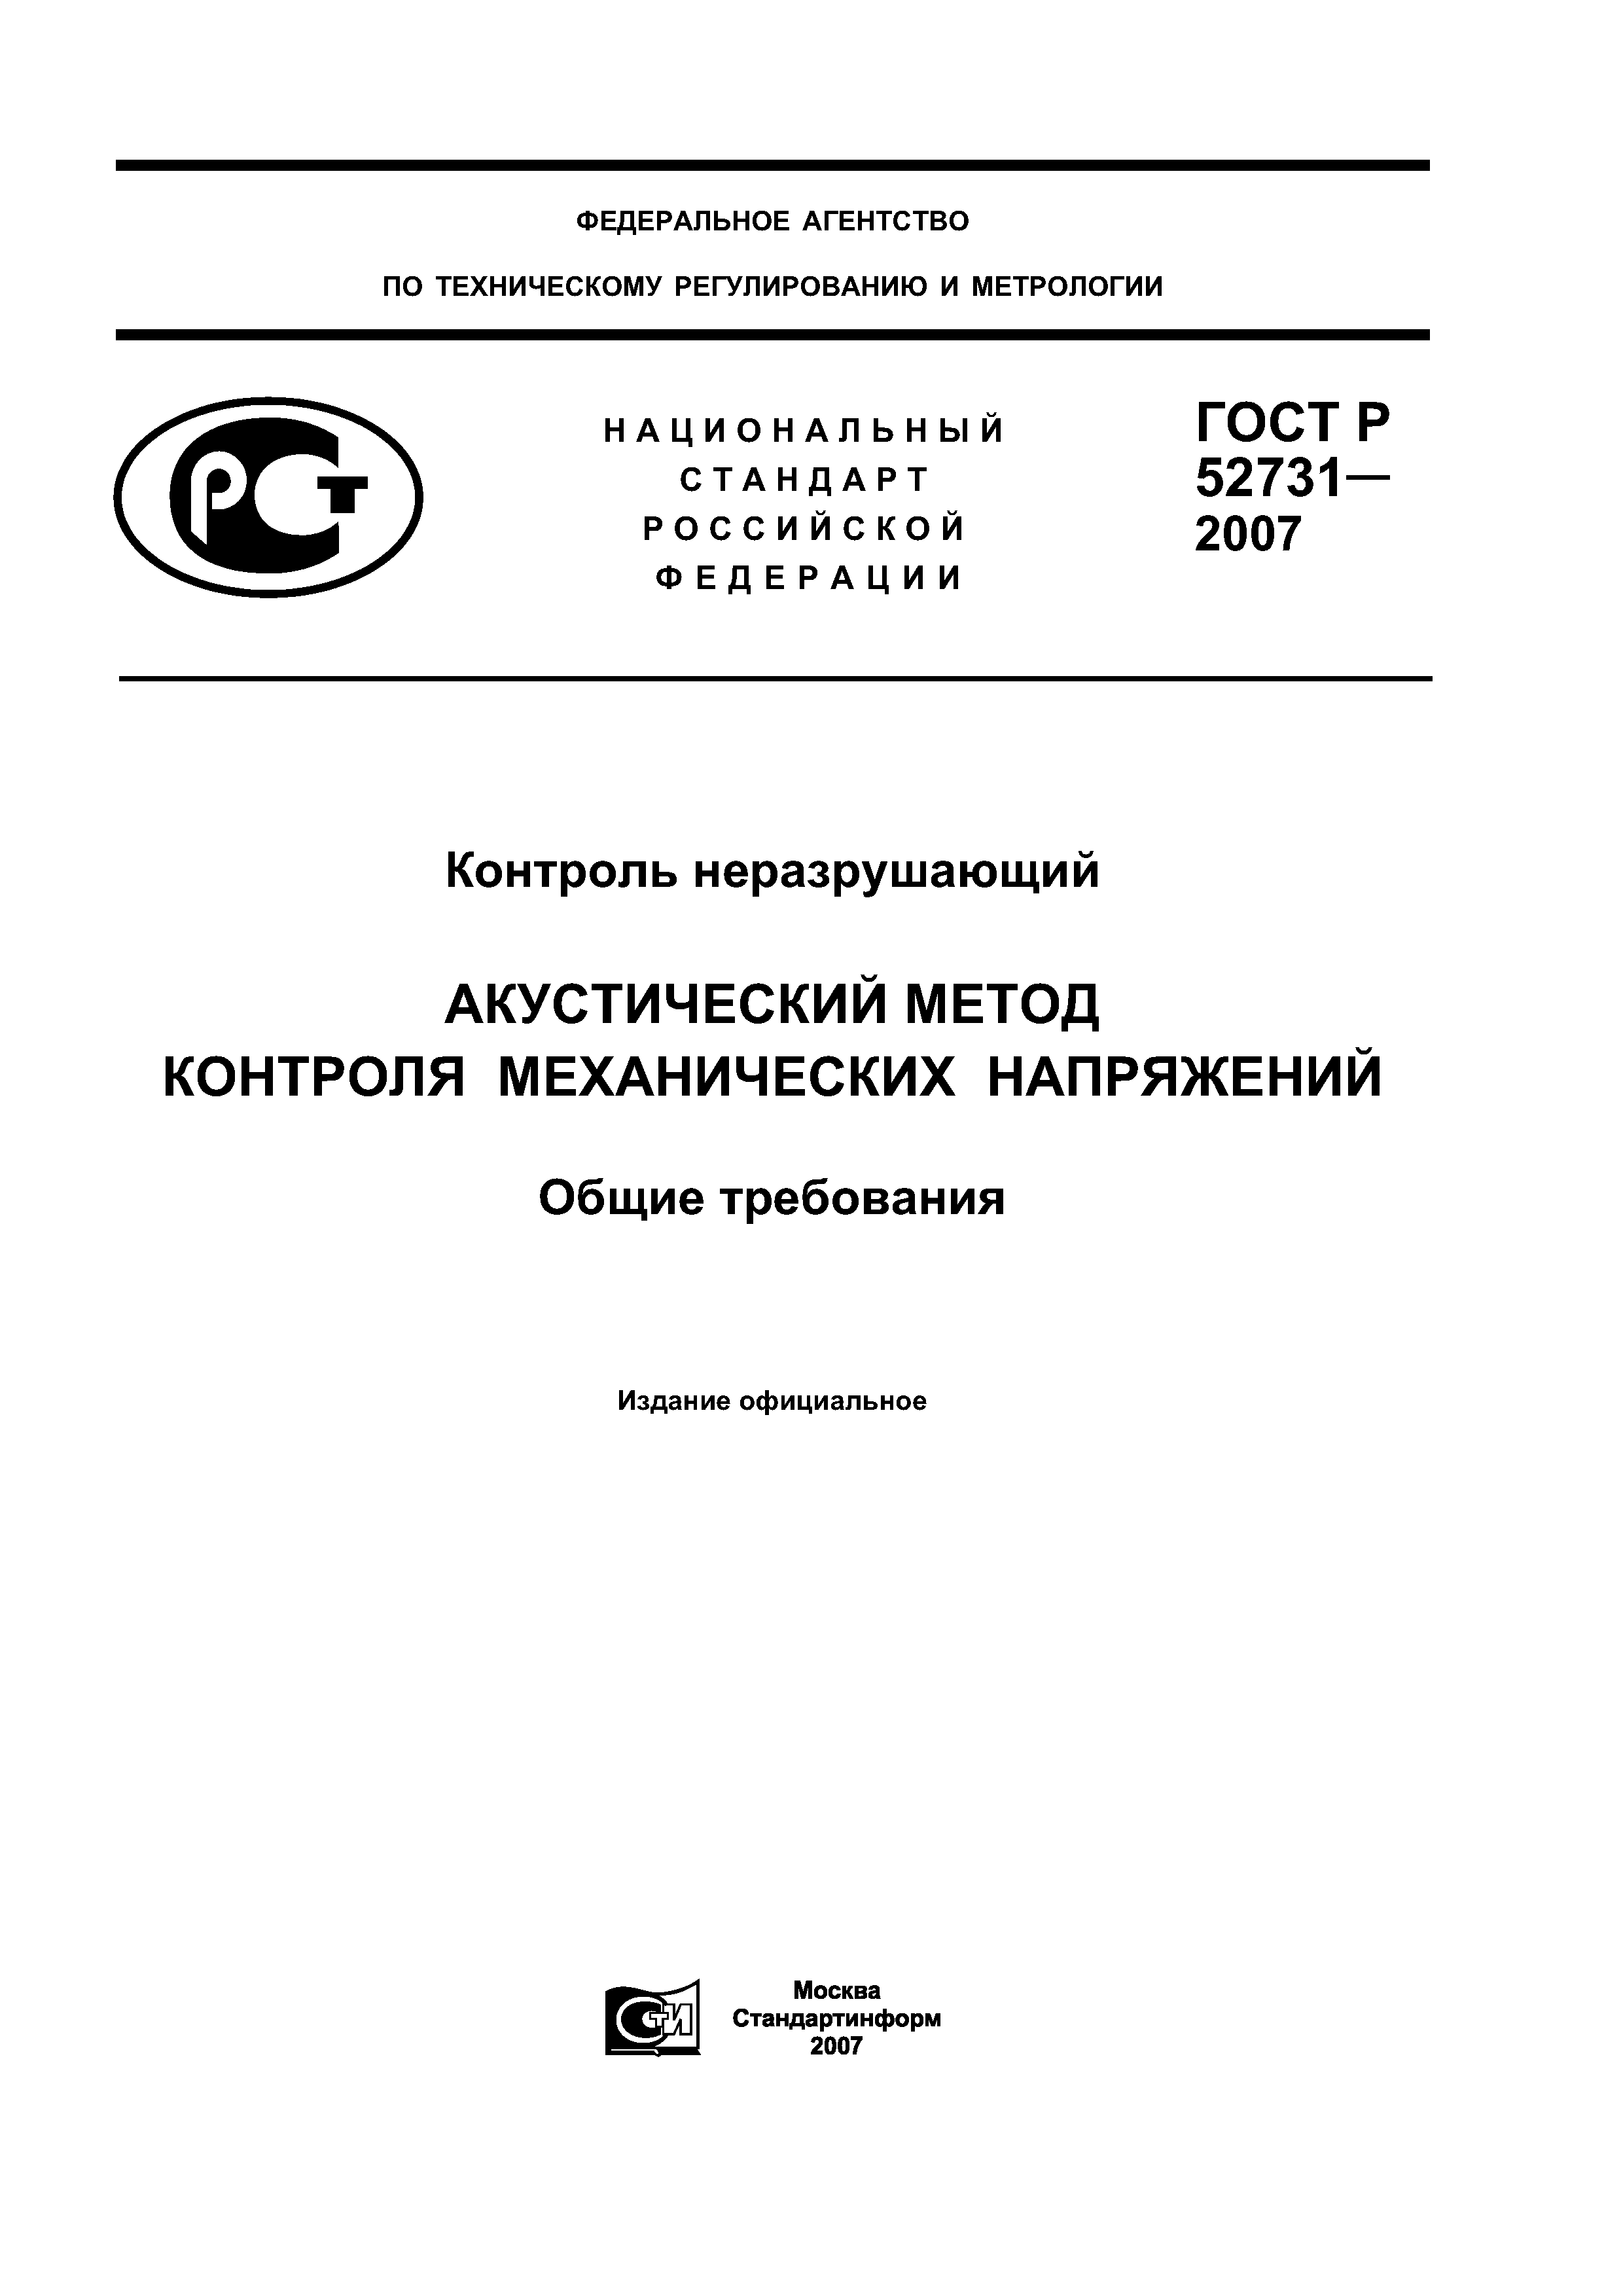 ГОСТ Р 52731-2007